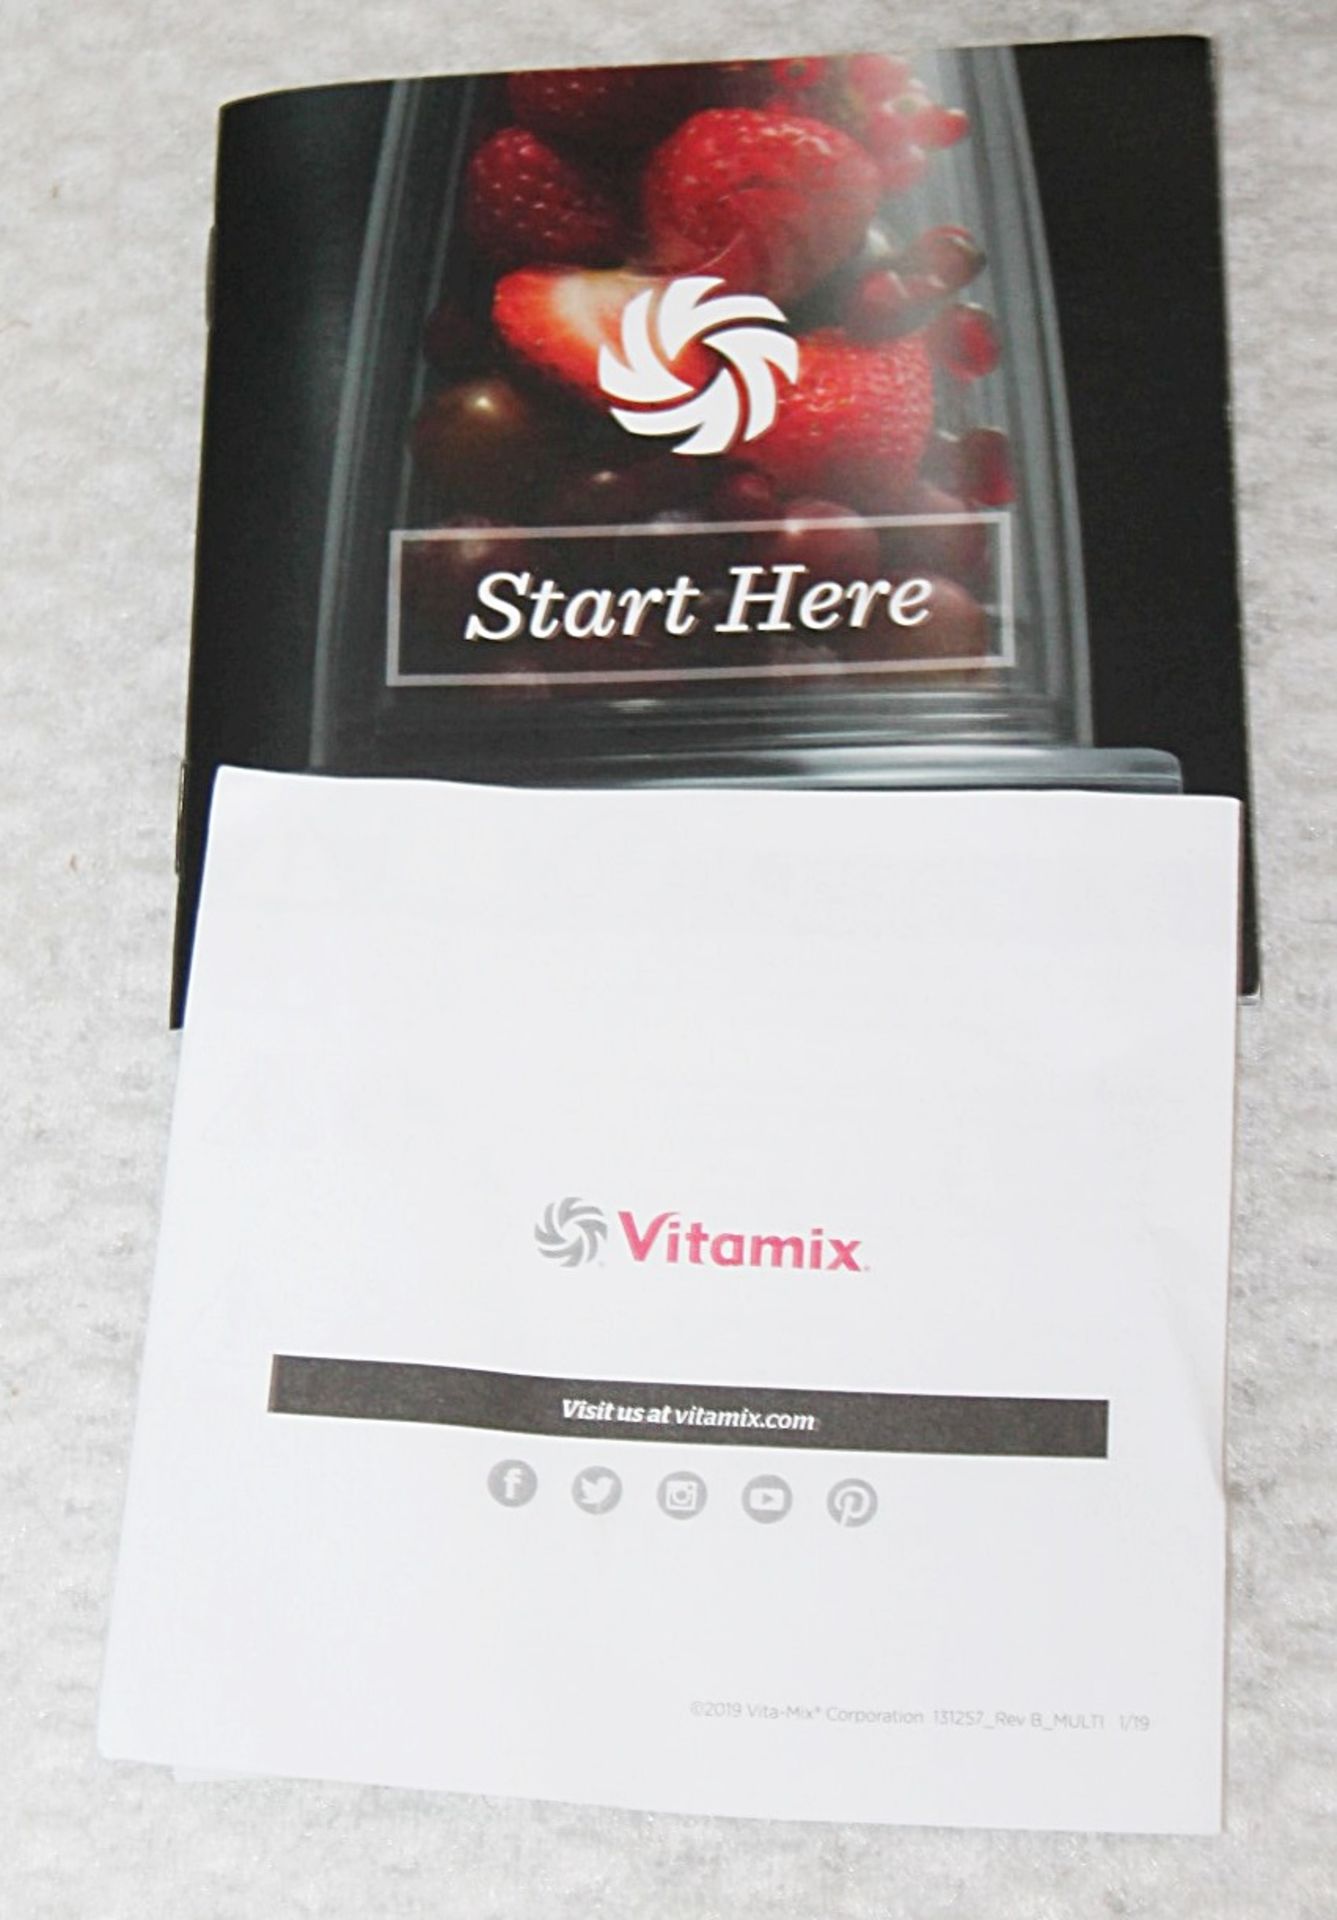 1 x VITA MIX Blending Cups Starter Kit - Original Price £120.00 - Unused Boxed Stock - Ref: HAS419/ - Image 6 of 9